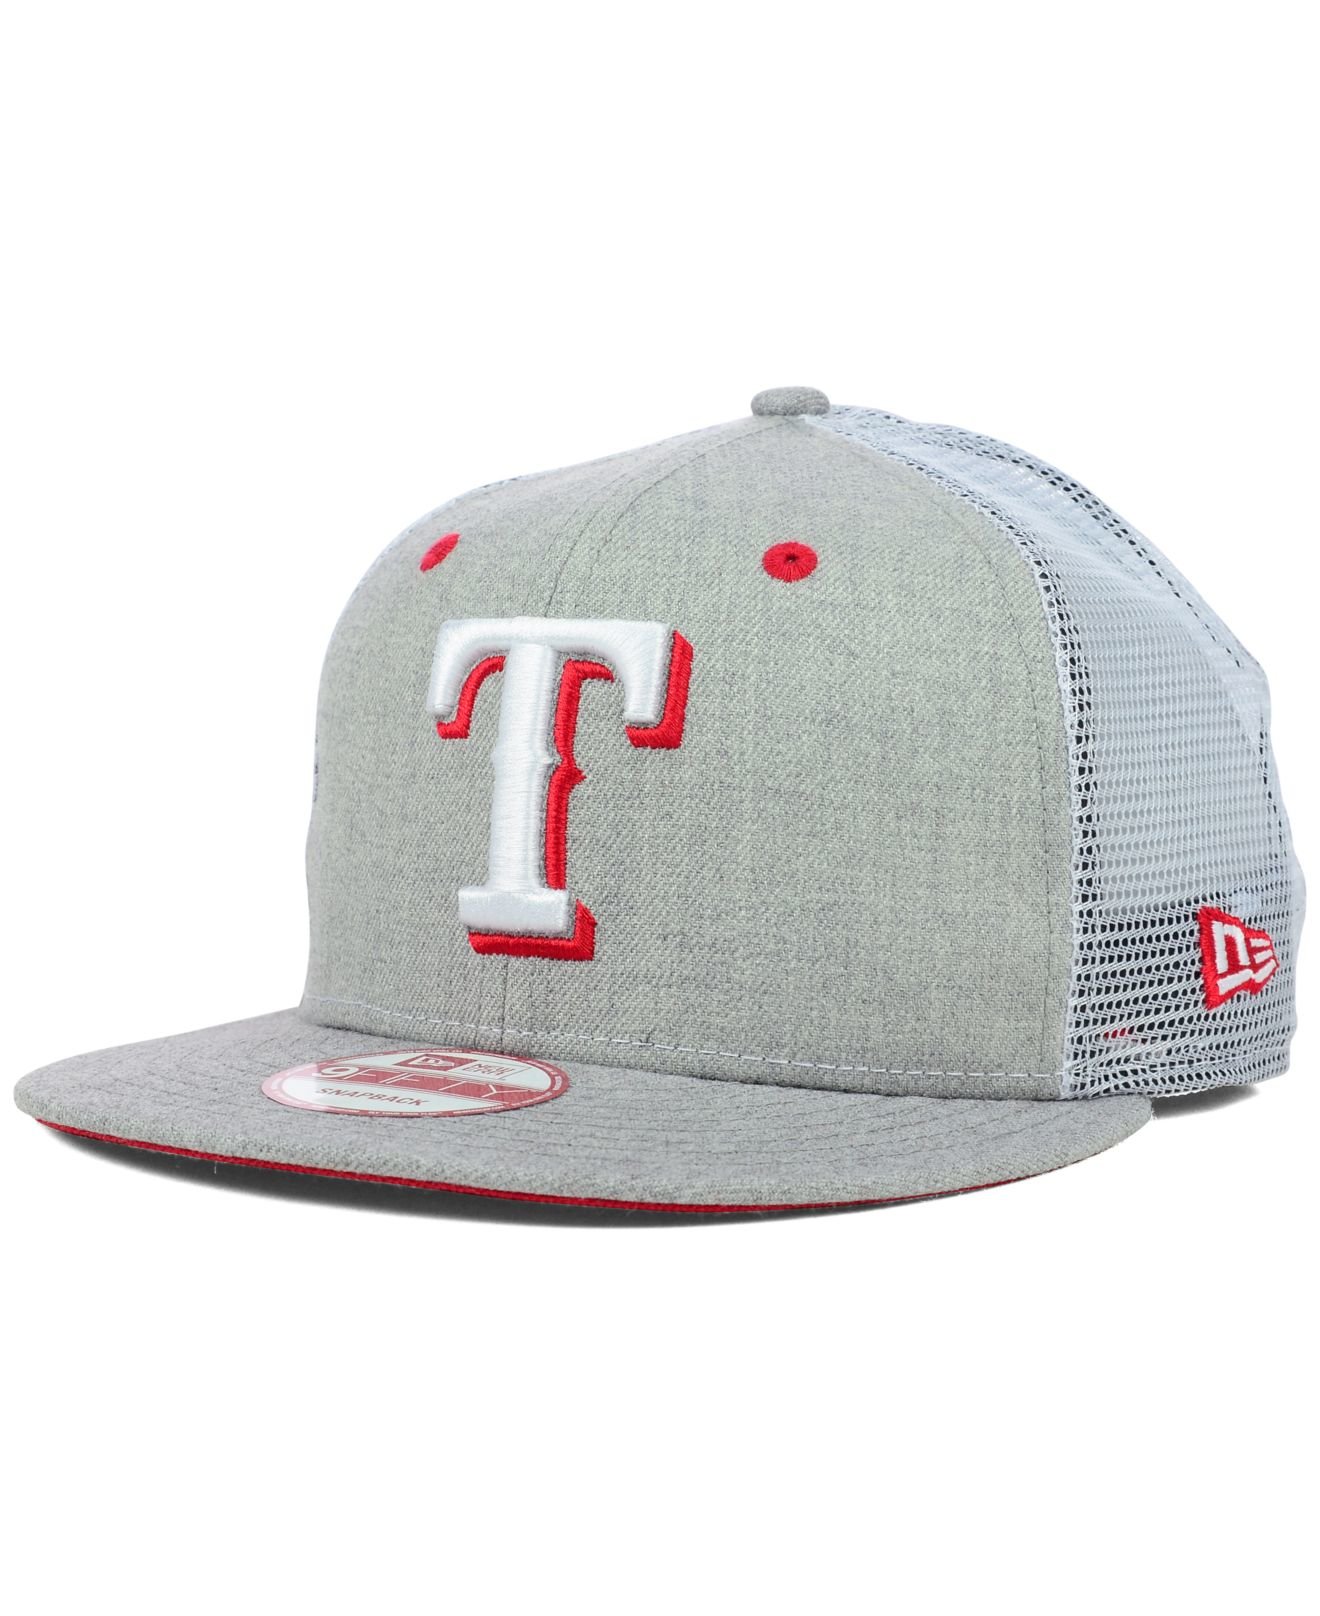 Texas Rangers Mesh Back Ball Cap - White/Gray